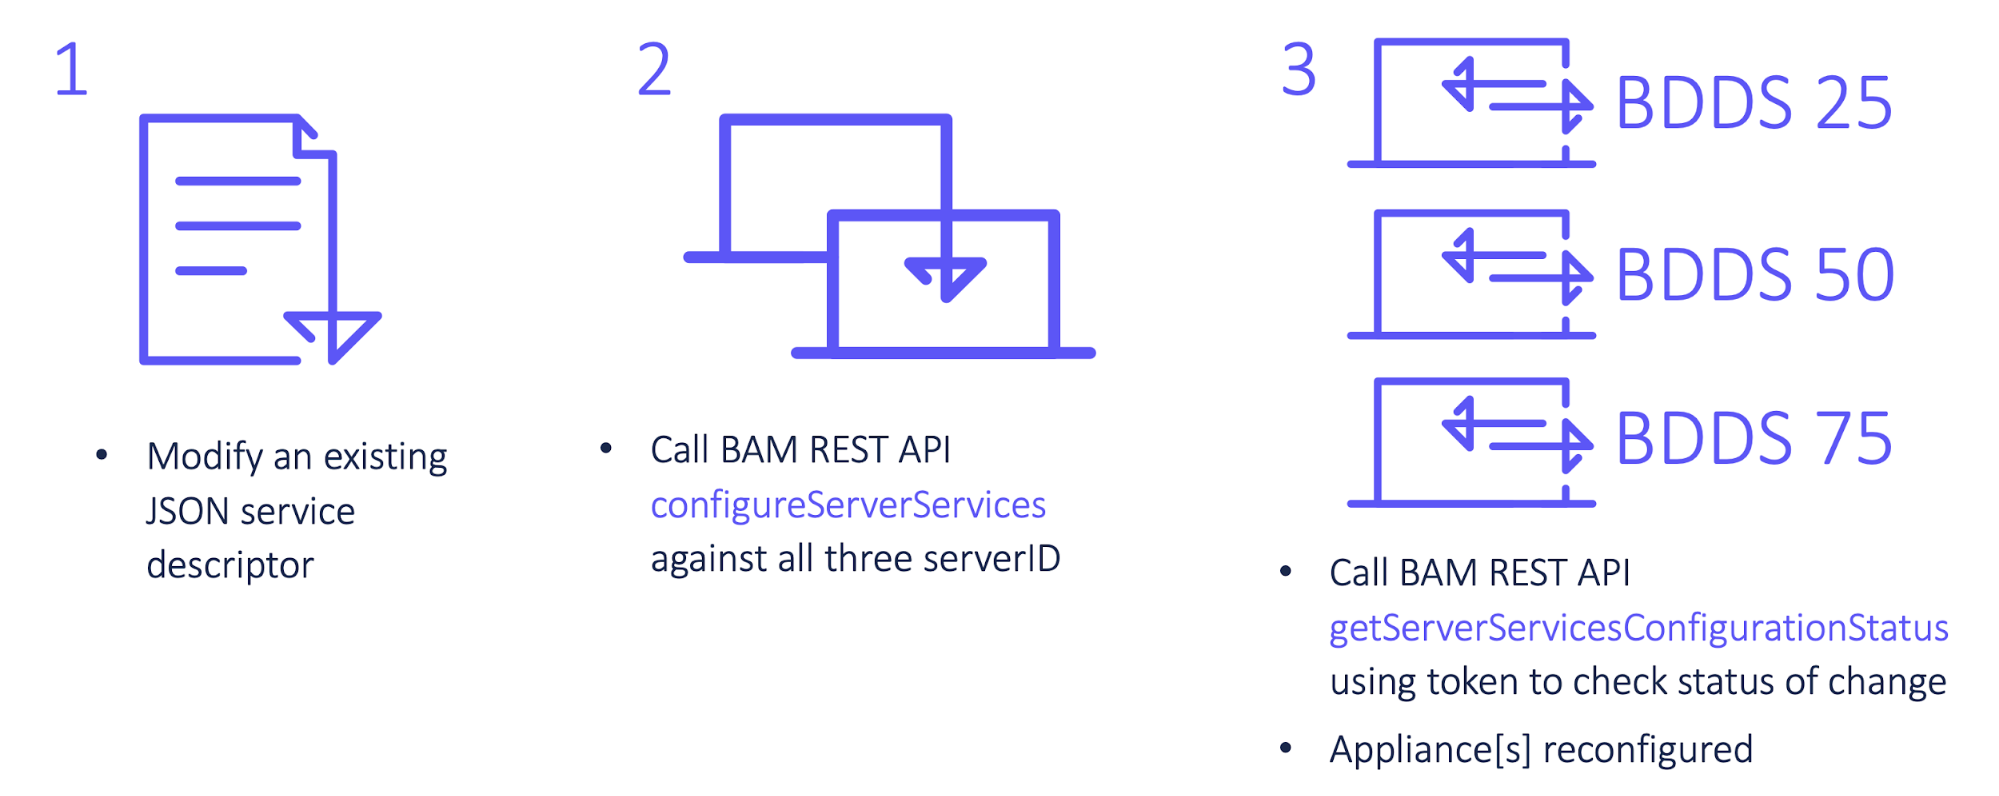 In BlueCat Integrity 9.3, modify JSON service descriptors and leverage REST APIs to make mass configuration changes